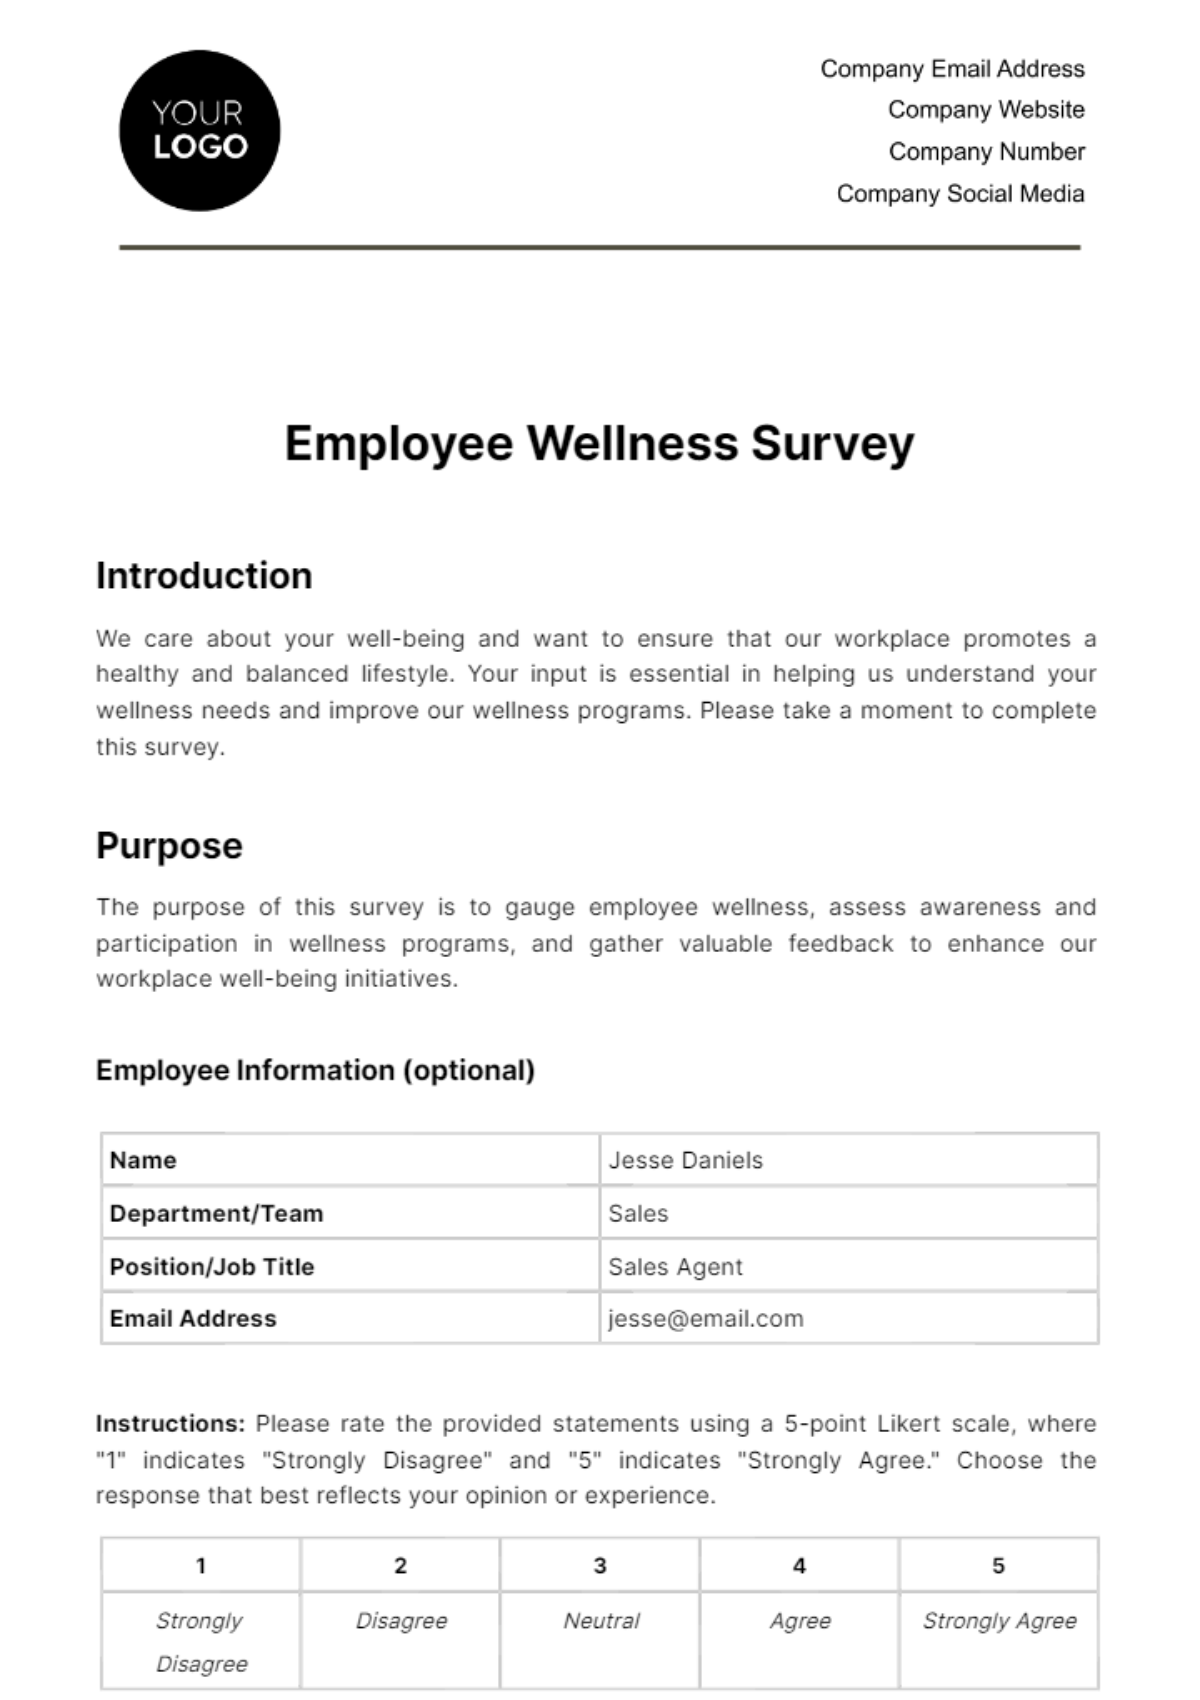 Free Employee Wellness Survey HR Template